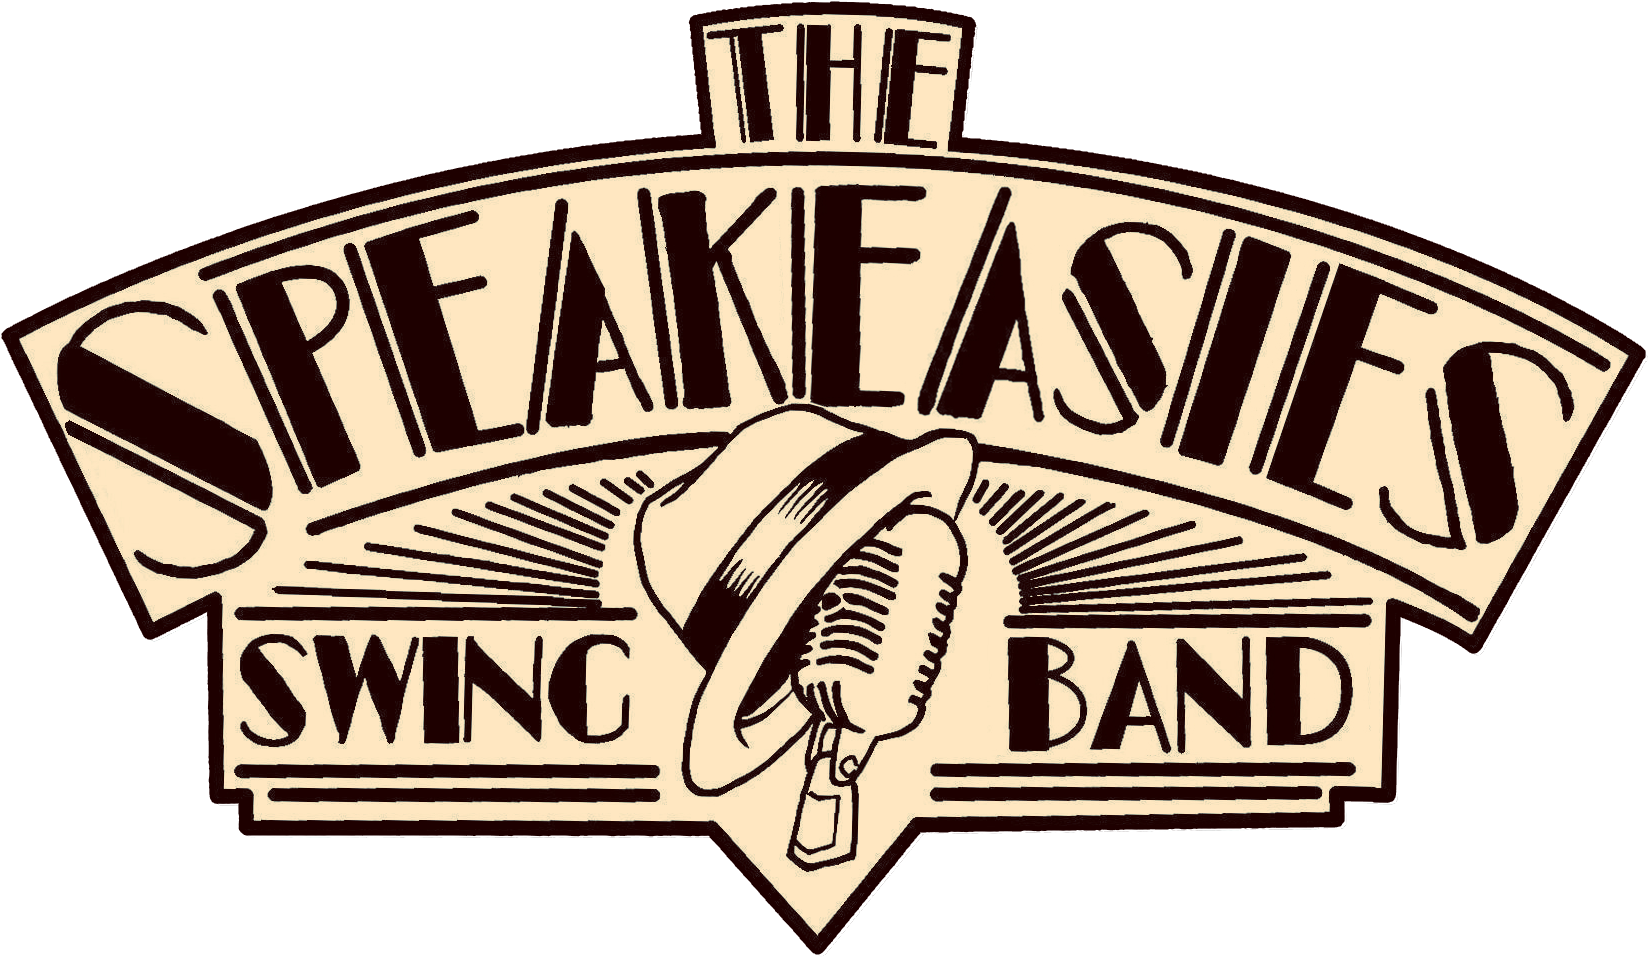 The Speakeasies' Swing Band - Speakeasies' Swing Band! / Bathtub Gin (1712x1003)